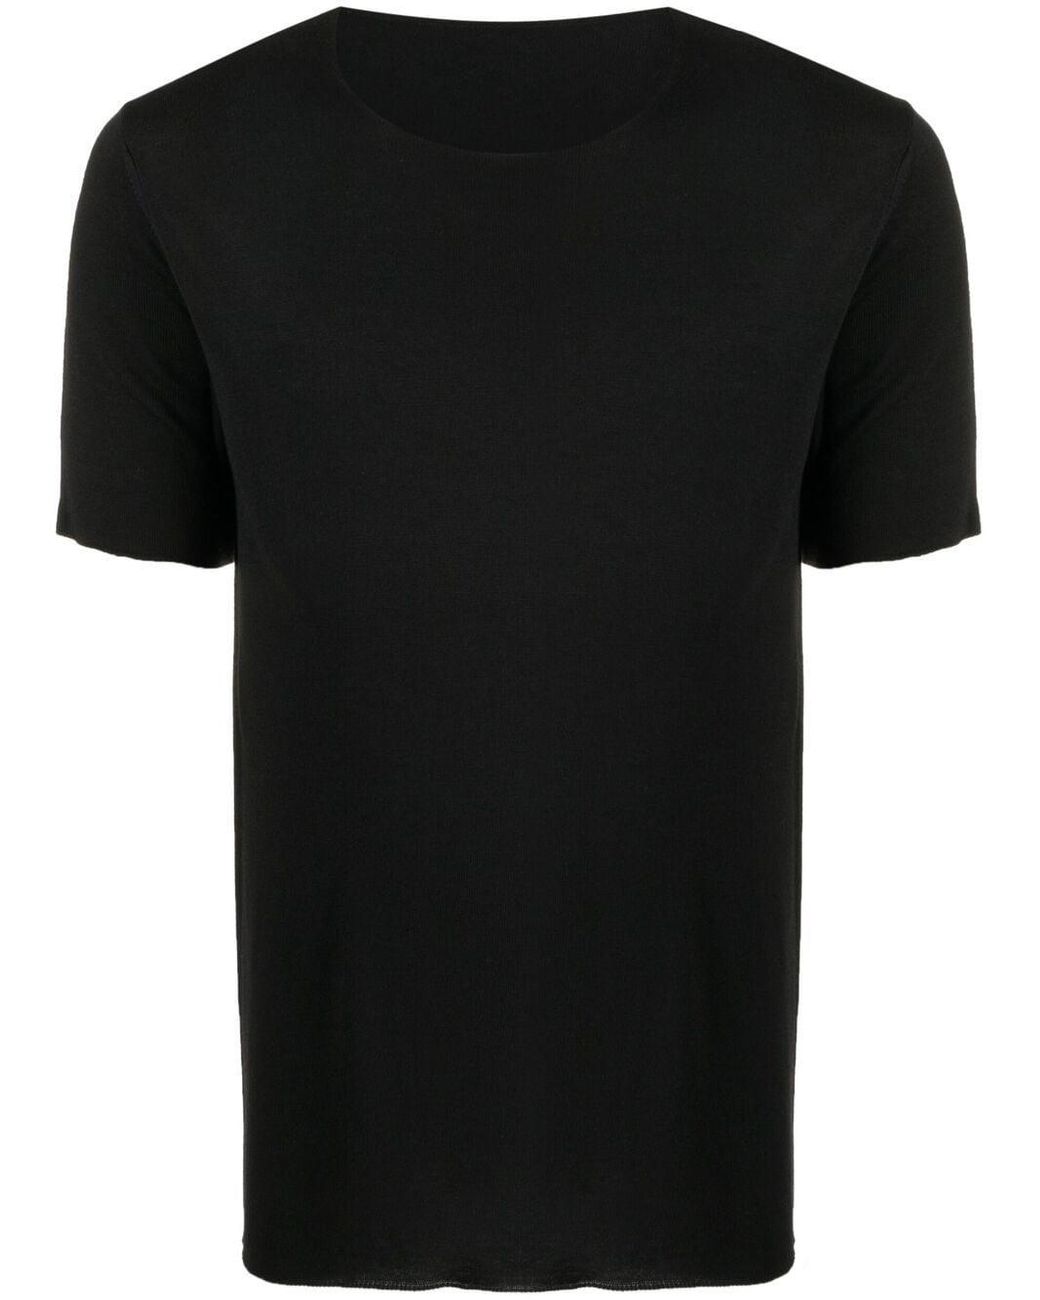 Roberto Collina Short-sleeved T-shirt in Black for Men - Lyst